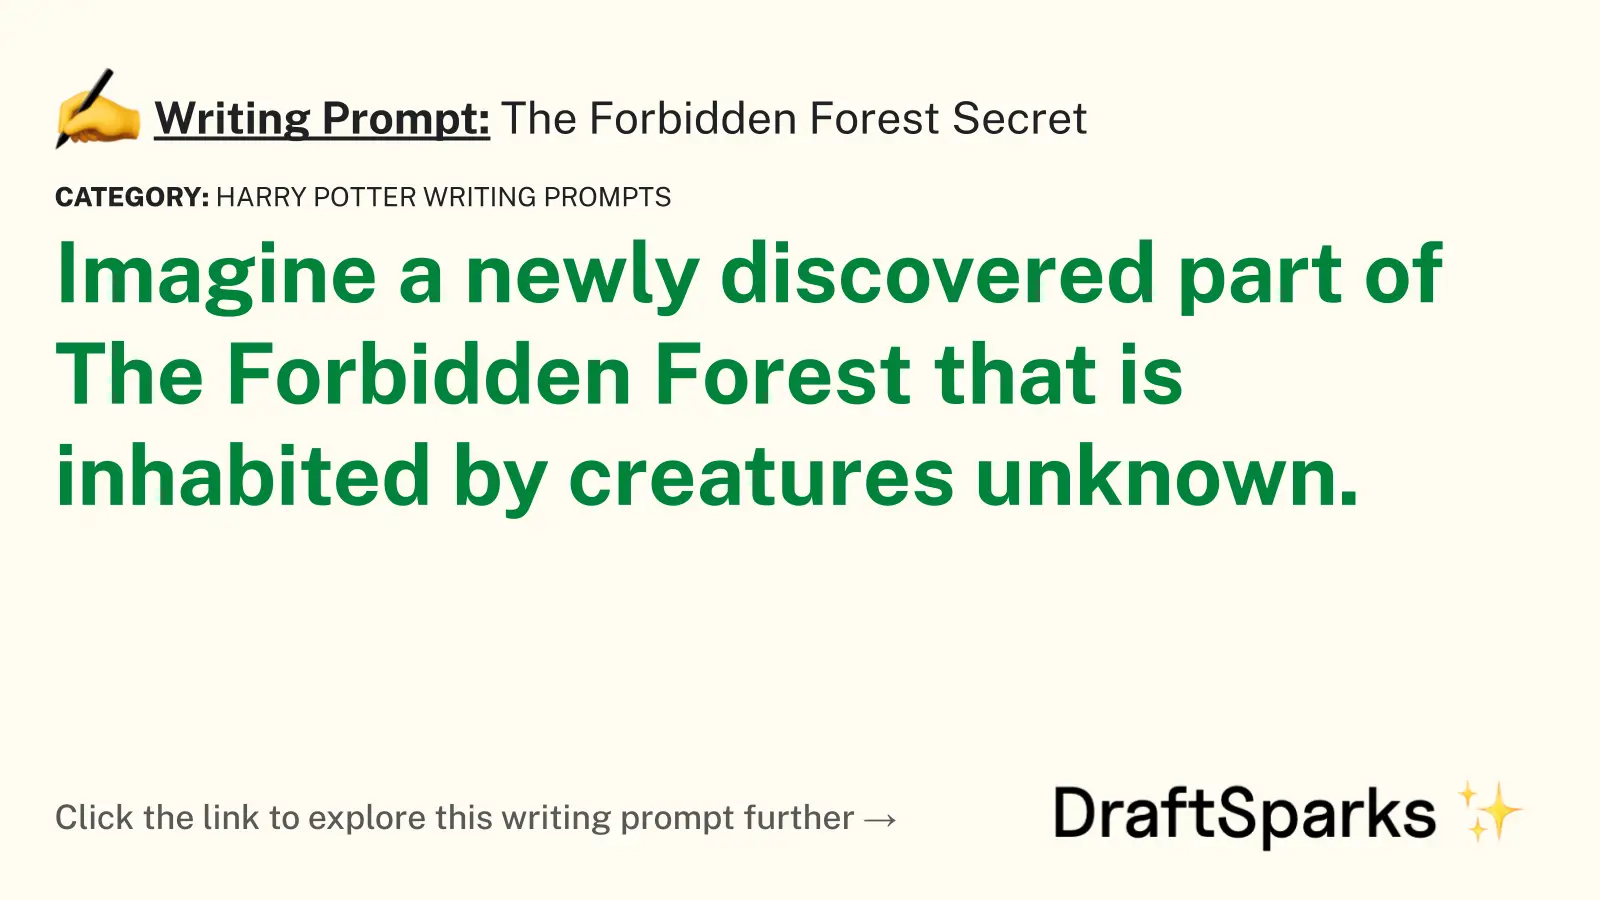 The Forbidden Forest Secret